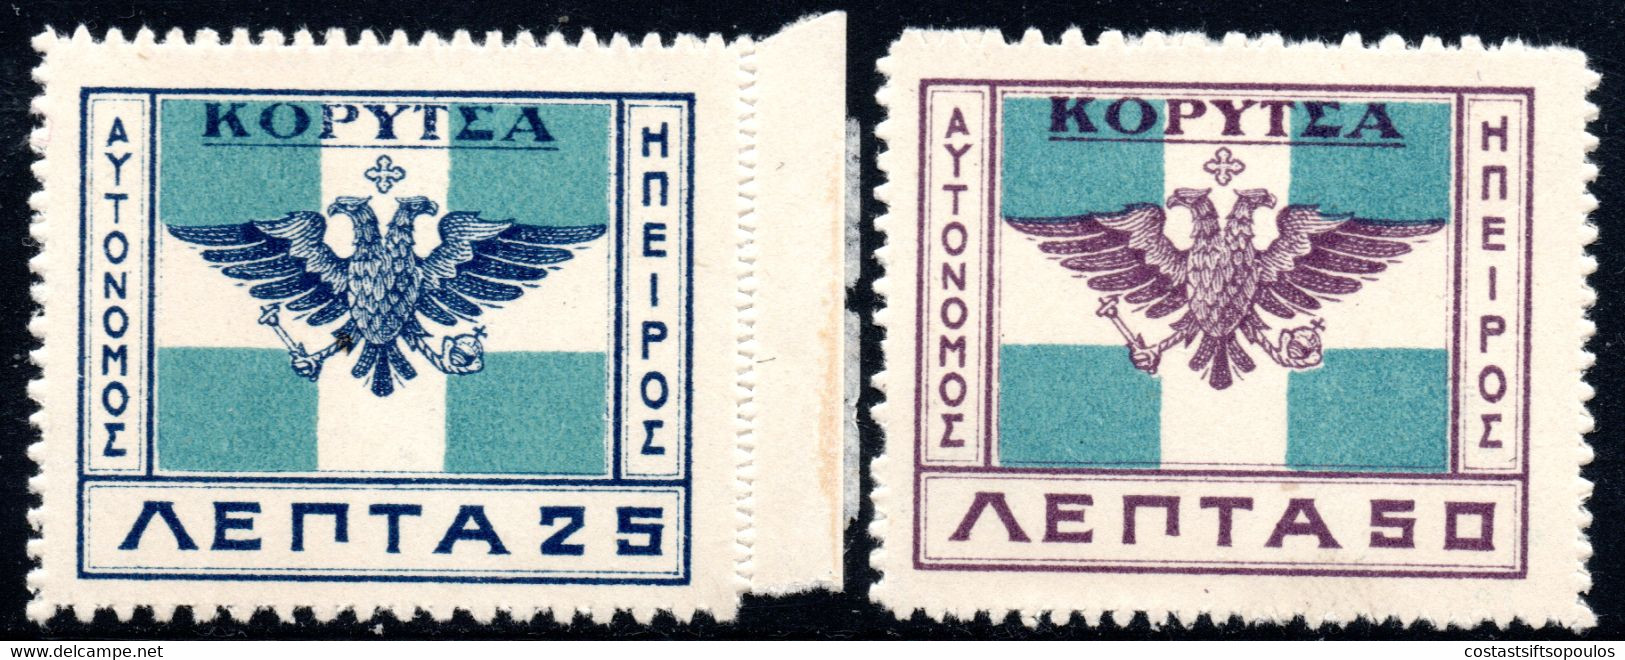 377.GREECE.ALBANIA,N.EPIRUS.1914 KORYTSA ISSUE,HELLAS 94 BH.B PERF.10 1/2  AT BOTTOM,95 AH.T PERF.10 1/2 AT TOP,MNH - Epirus & Albania